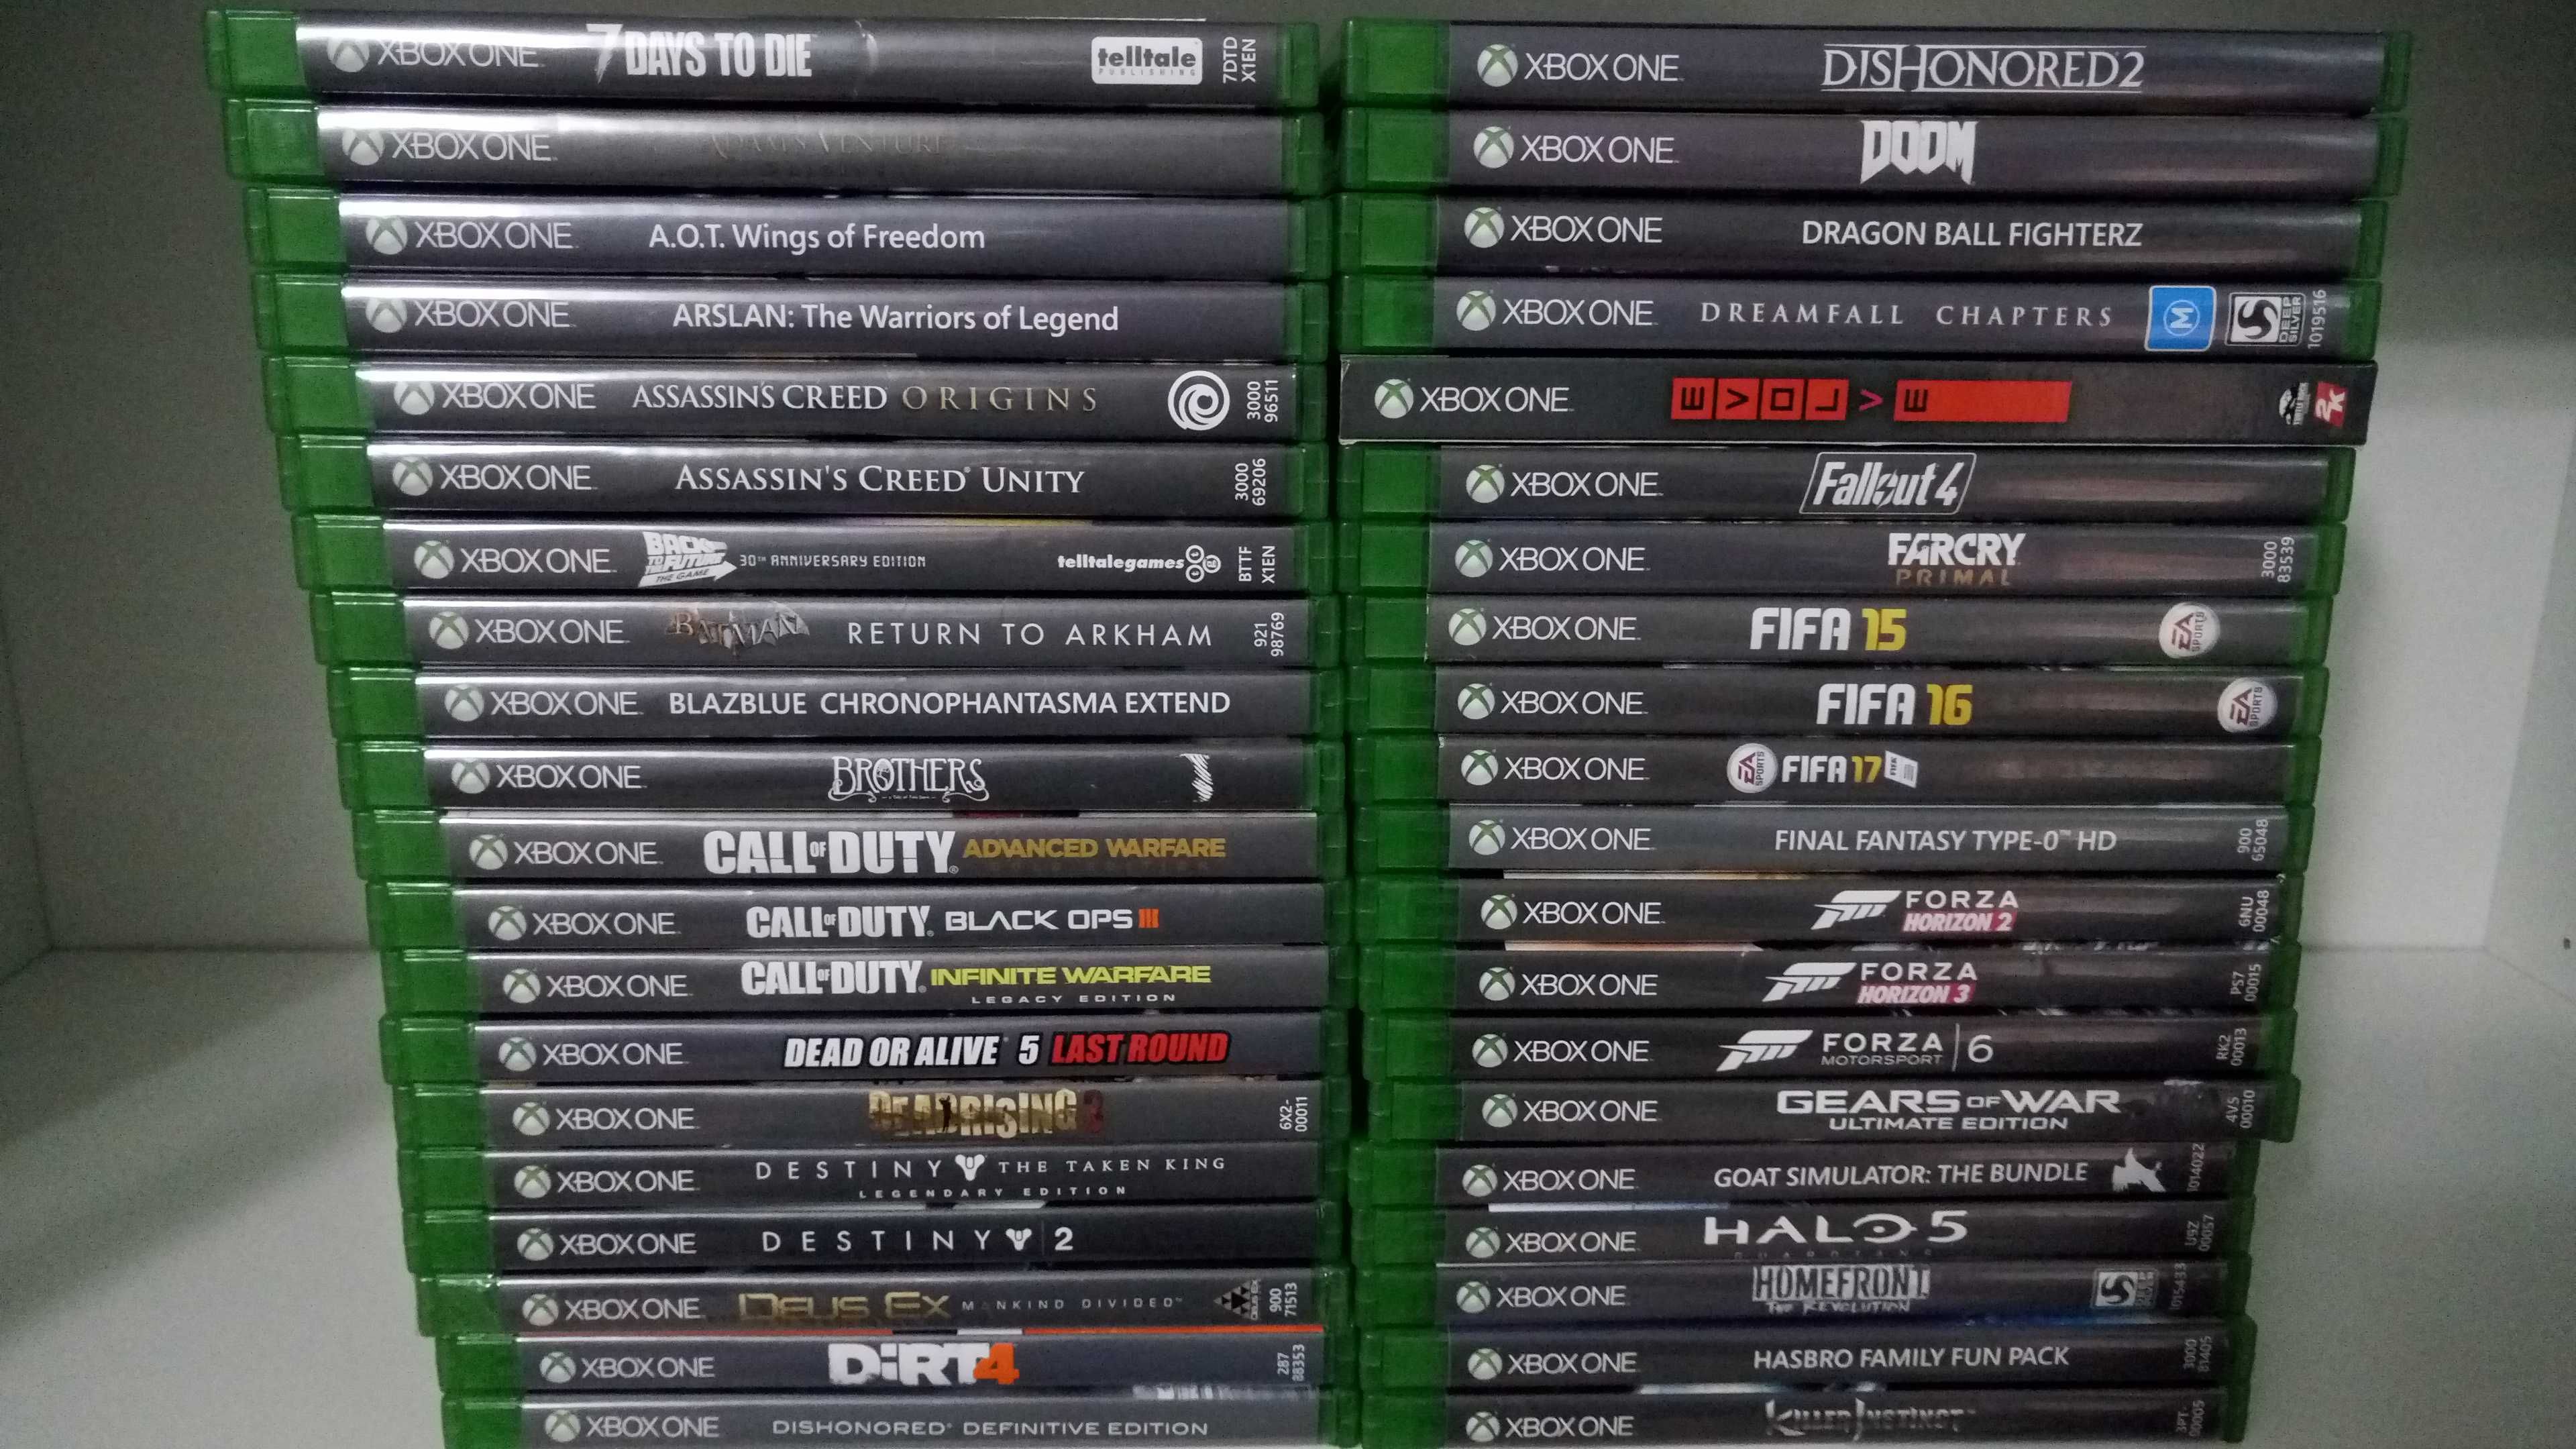 Vand Far Cry 4 Xbox One XBox 1